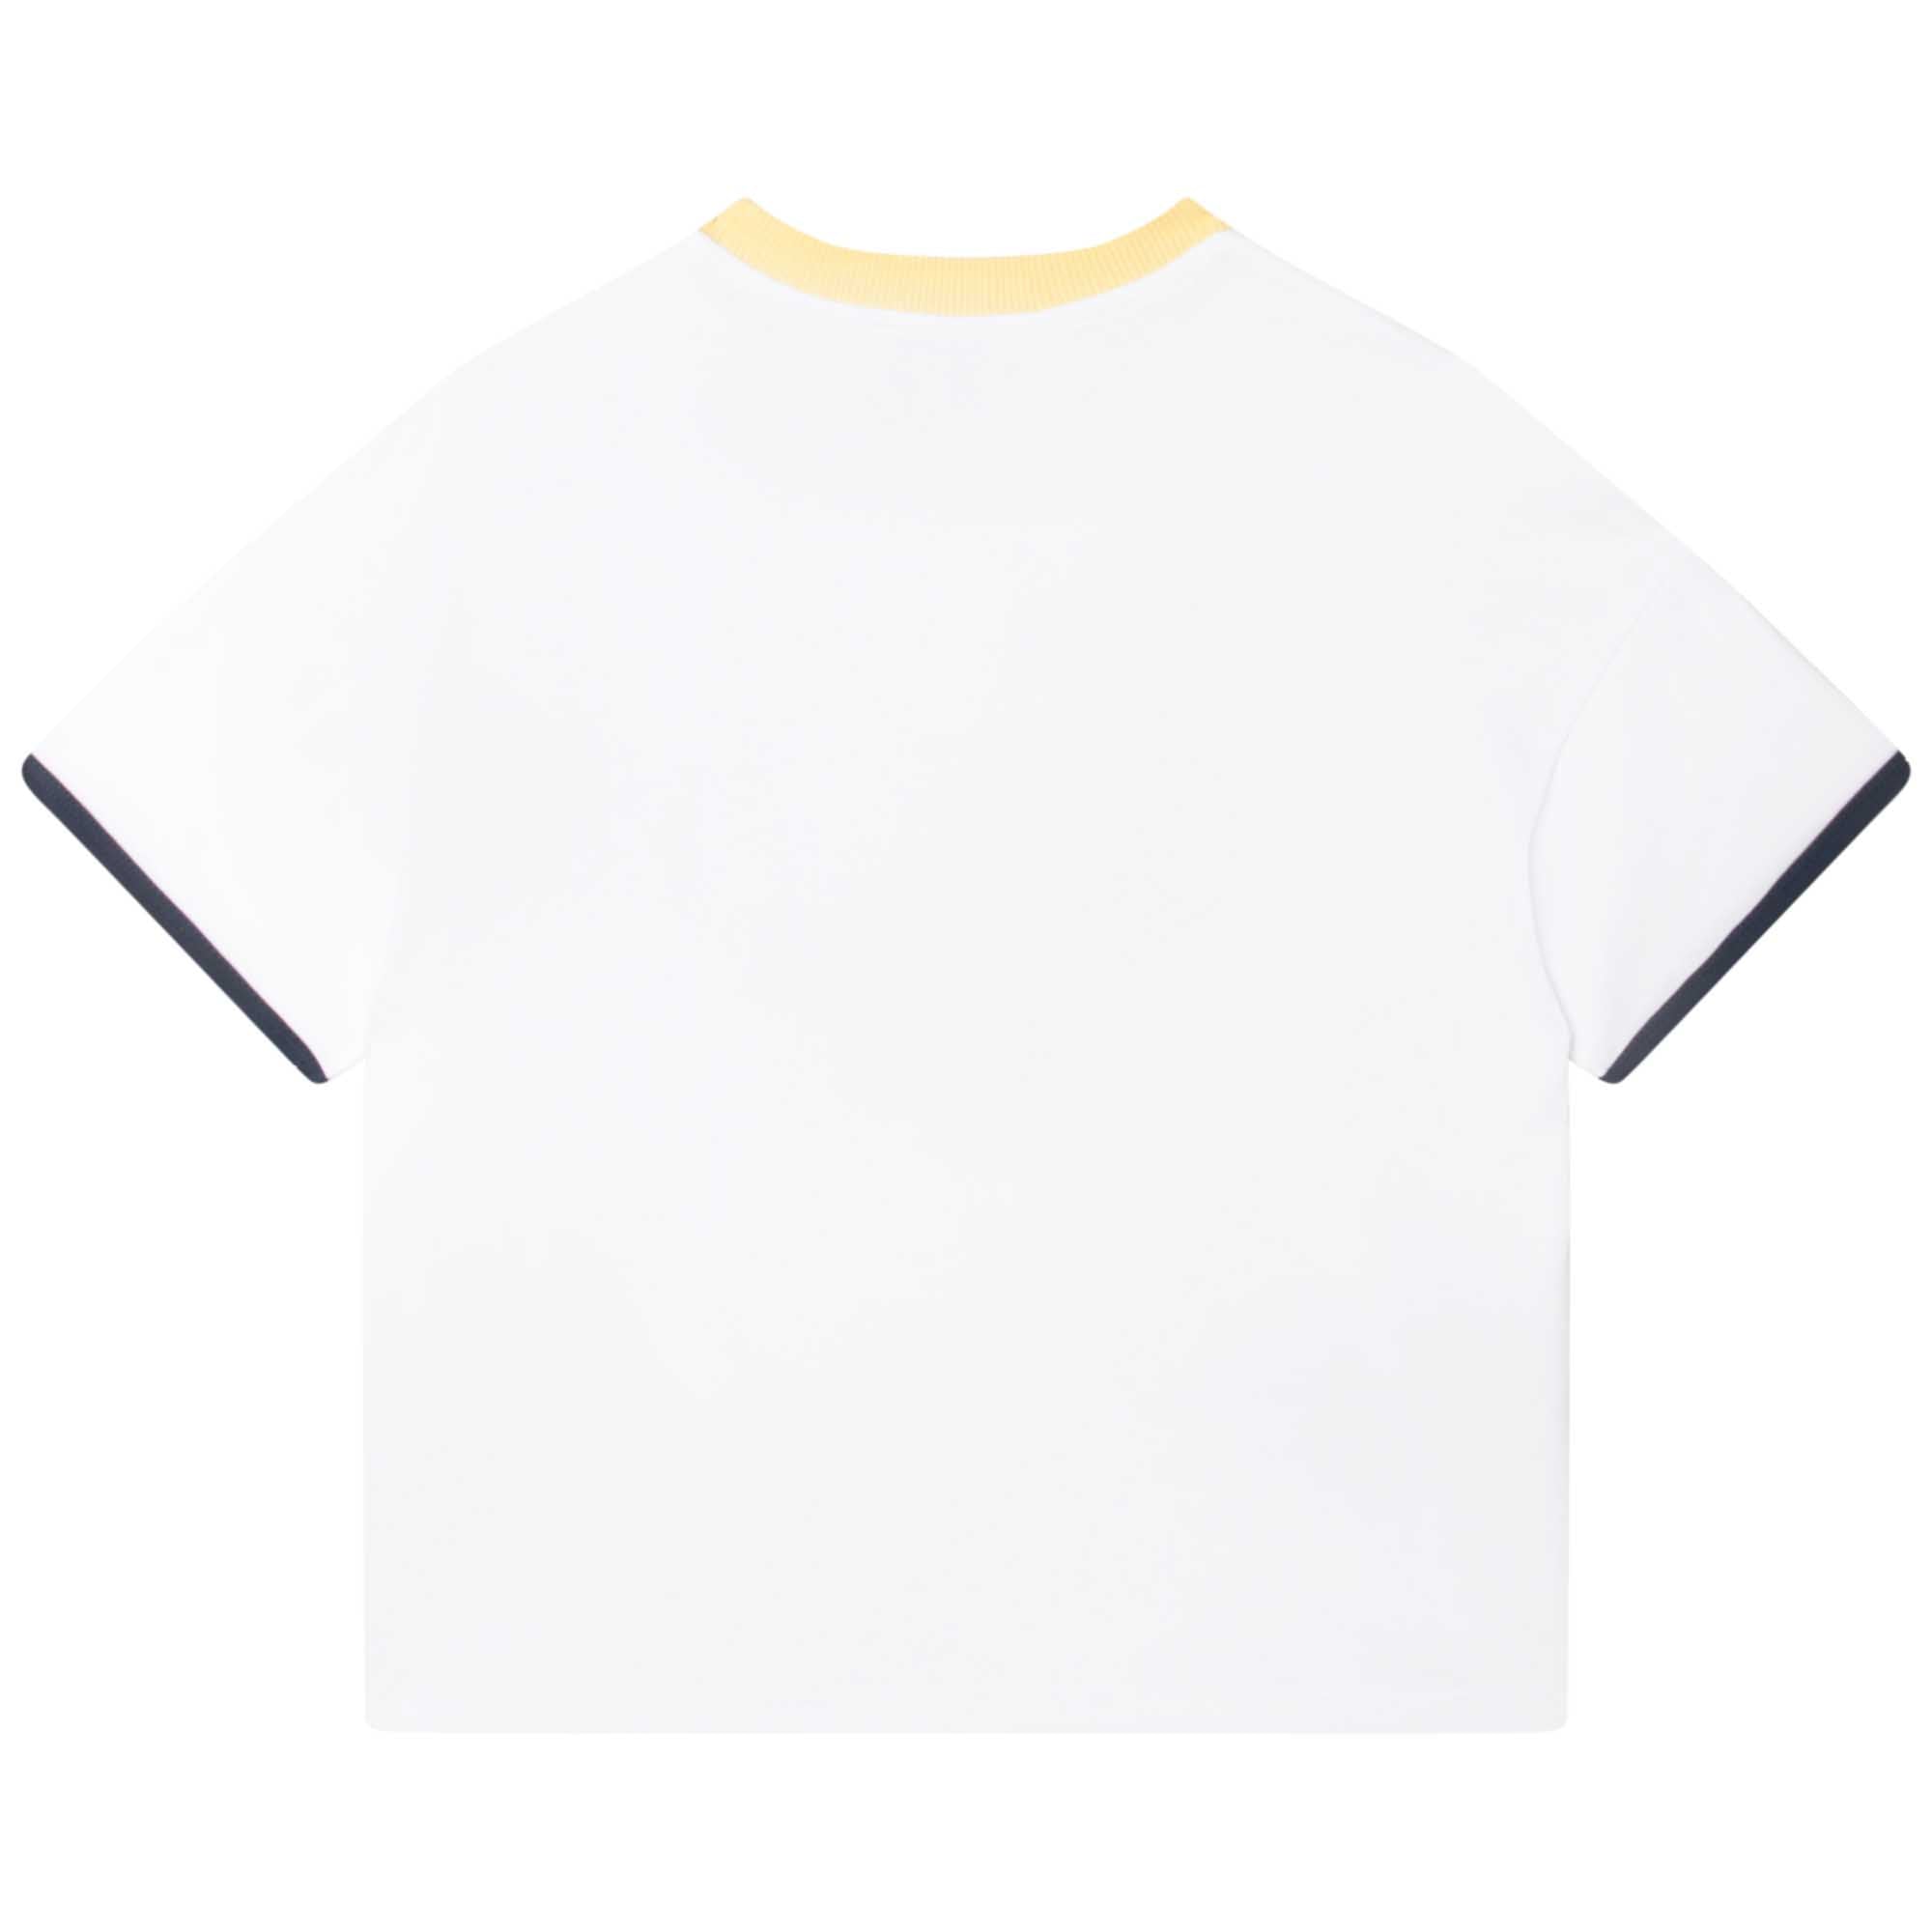 Kenzo Baseball T-Shirt